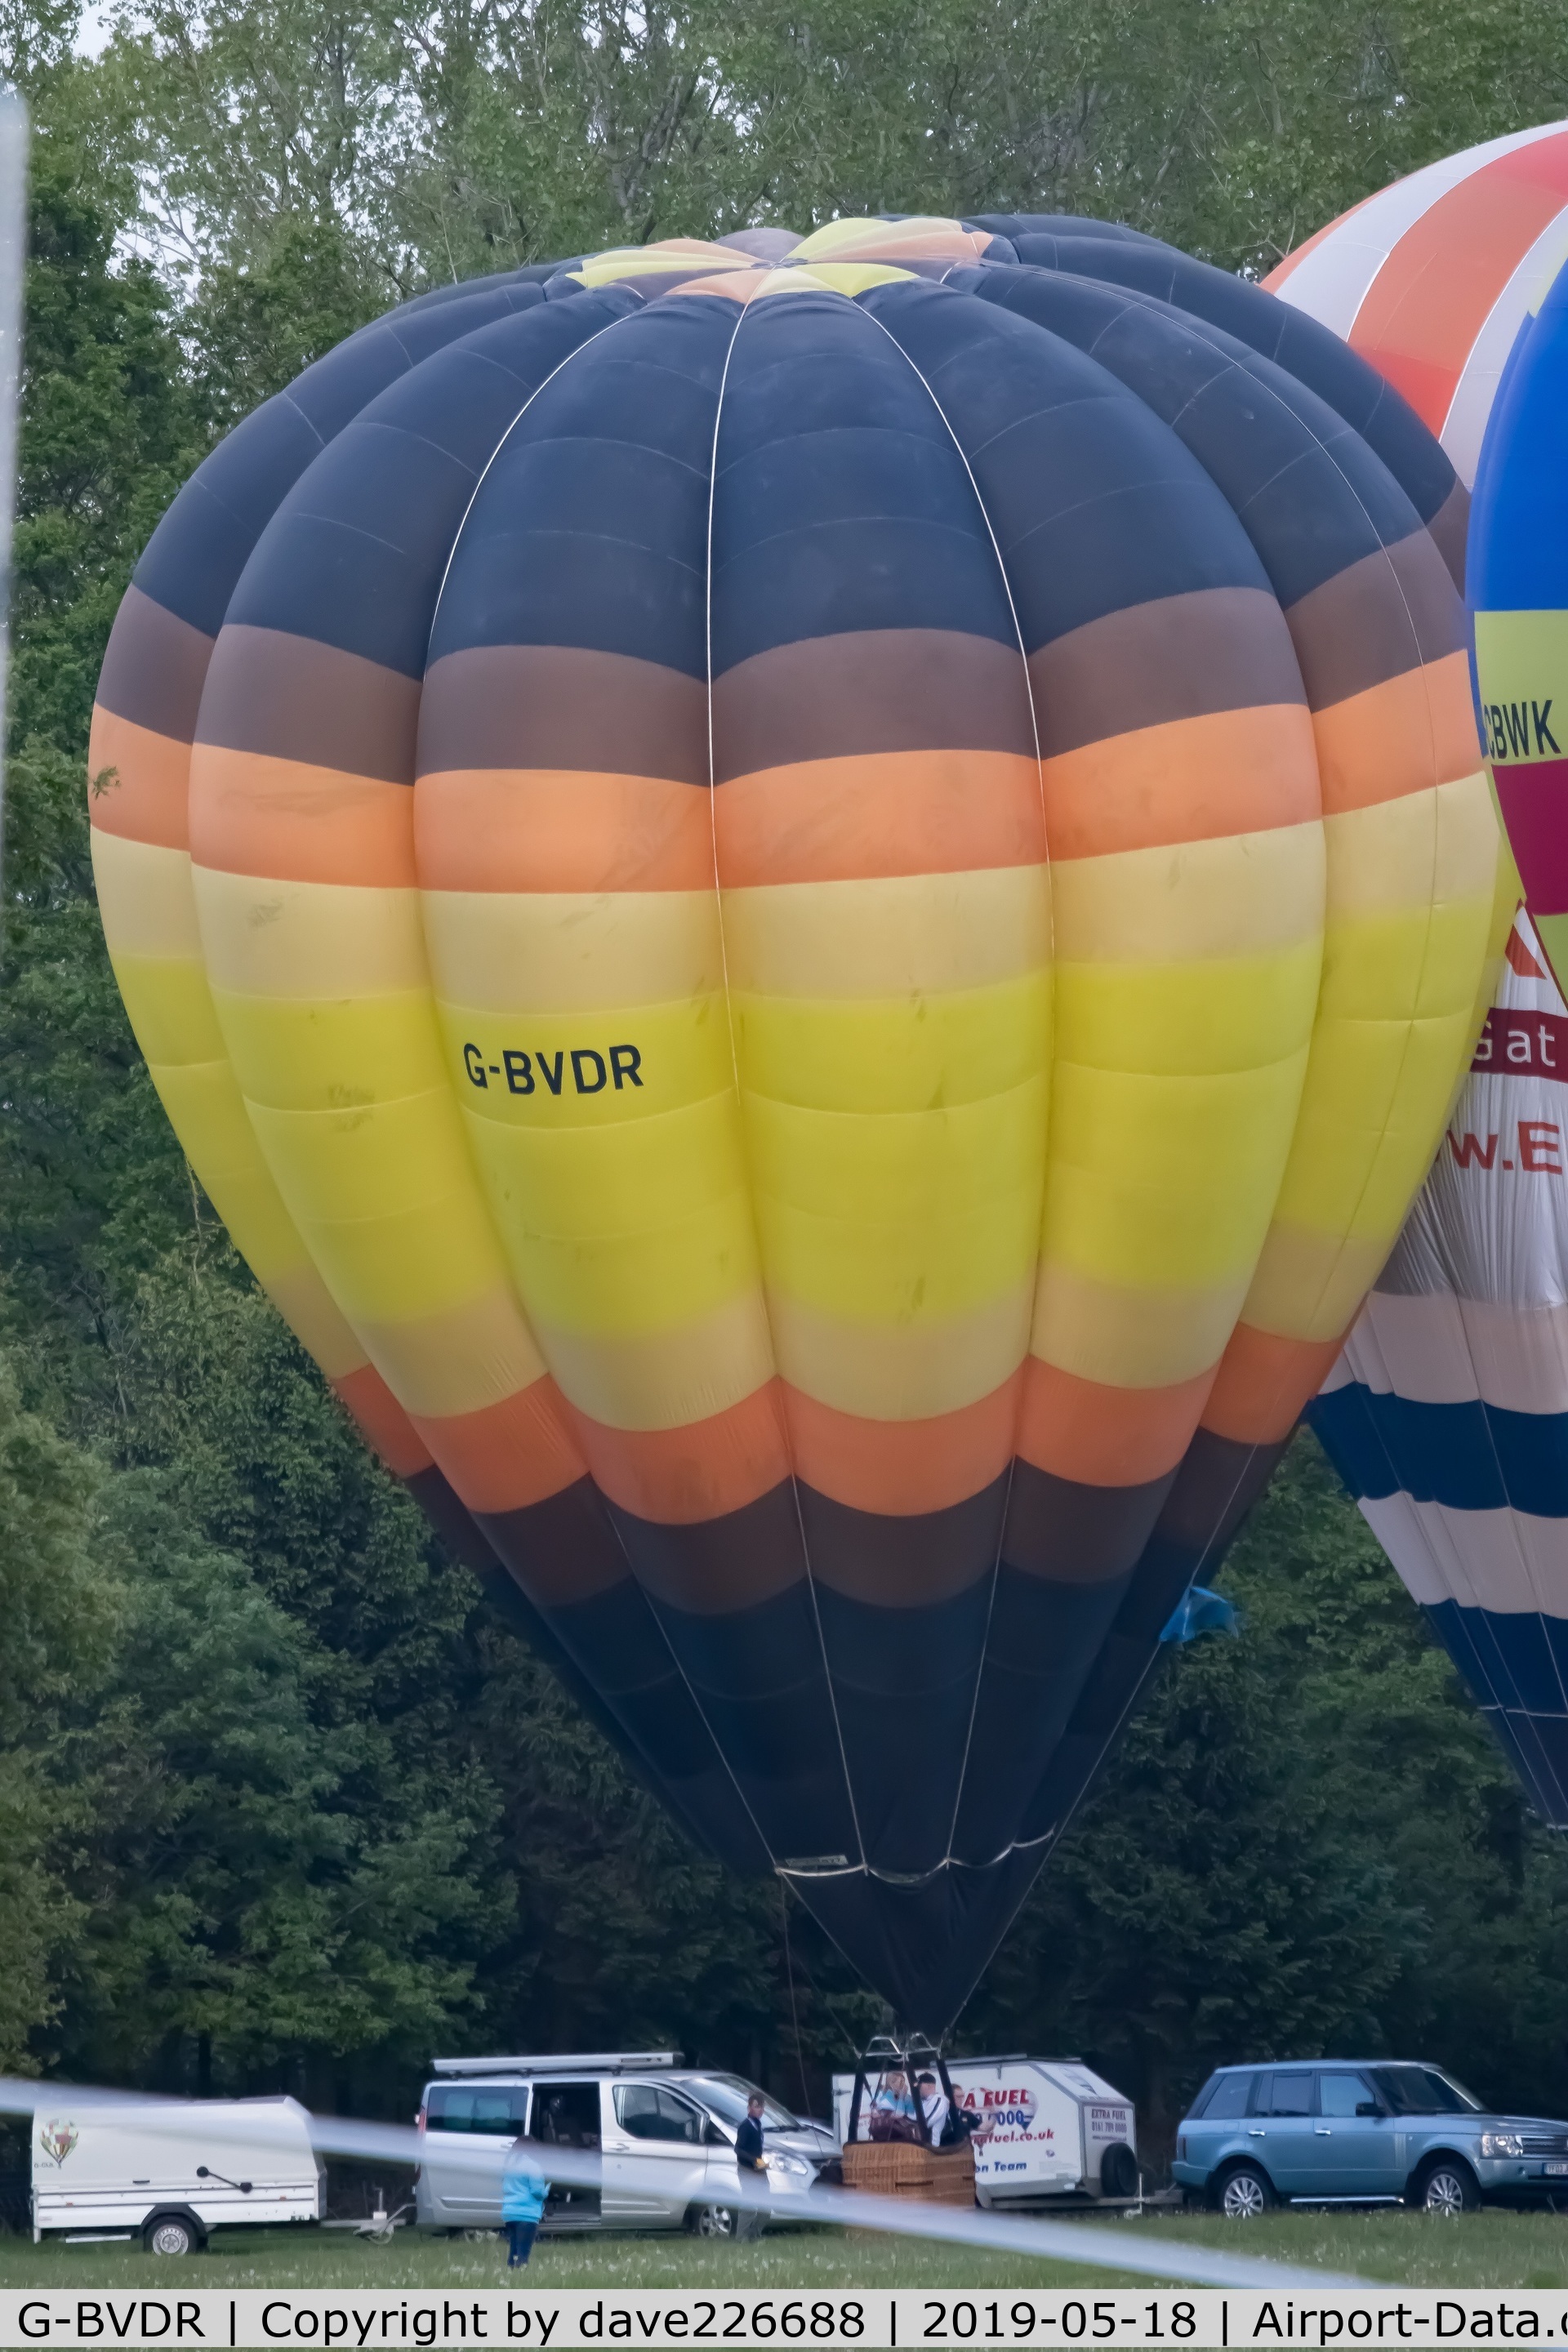 G-BVDR, 1993 Cameron Balloons O-77 C/N 2452, G BVDR at the 2019 Midlands Air Festival